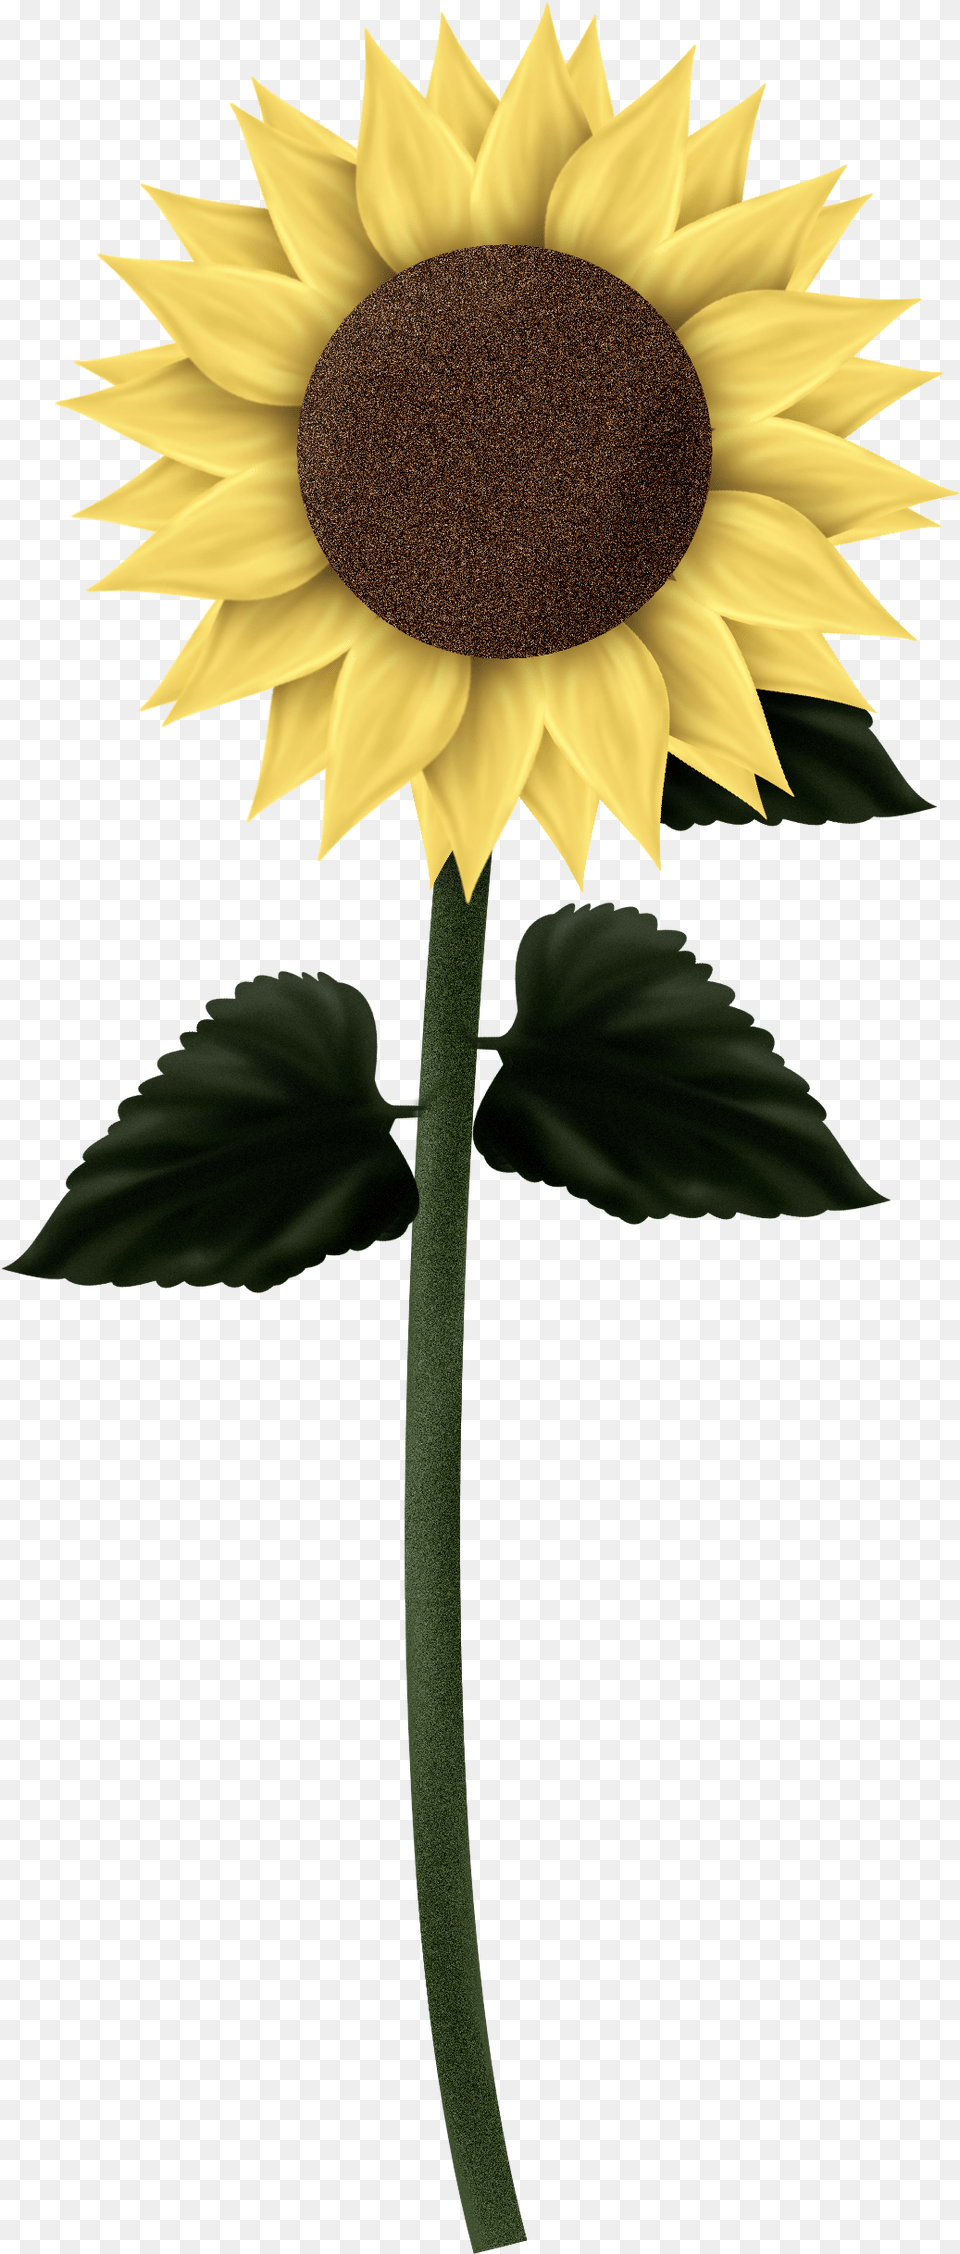 Sunflowers Sunflowers, Flower, Plant, Sunflower Free Png Download